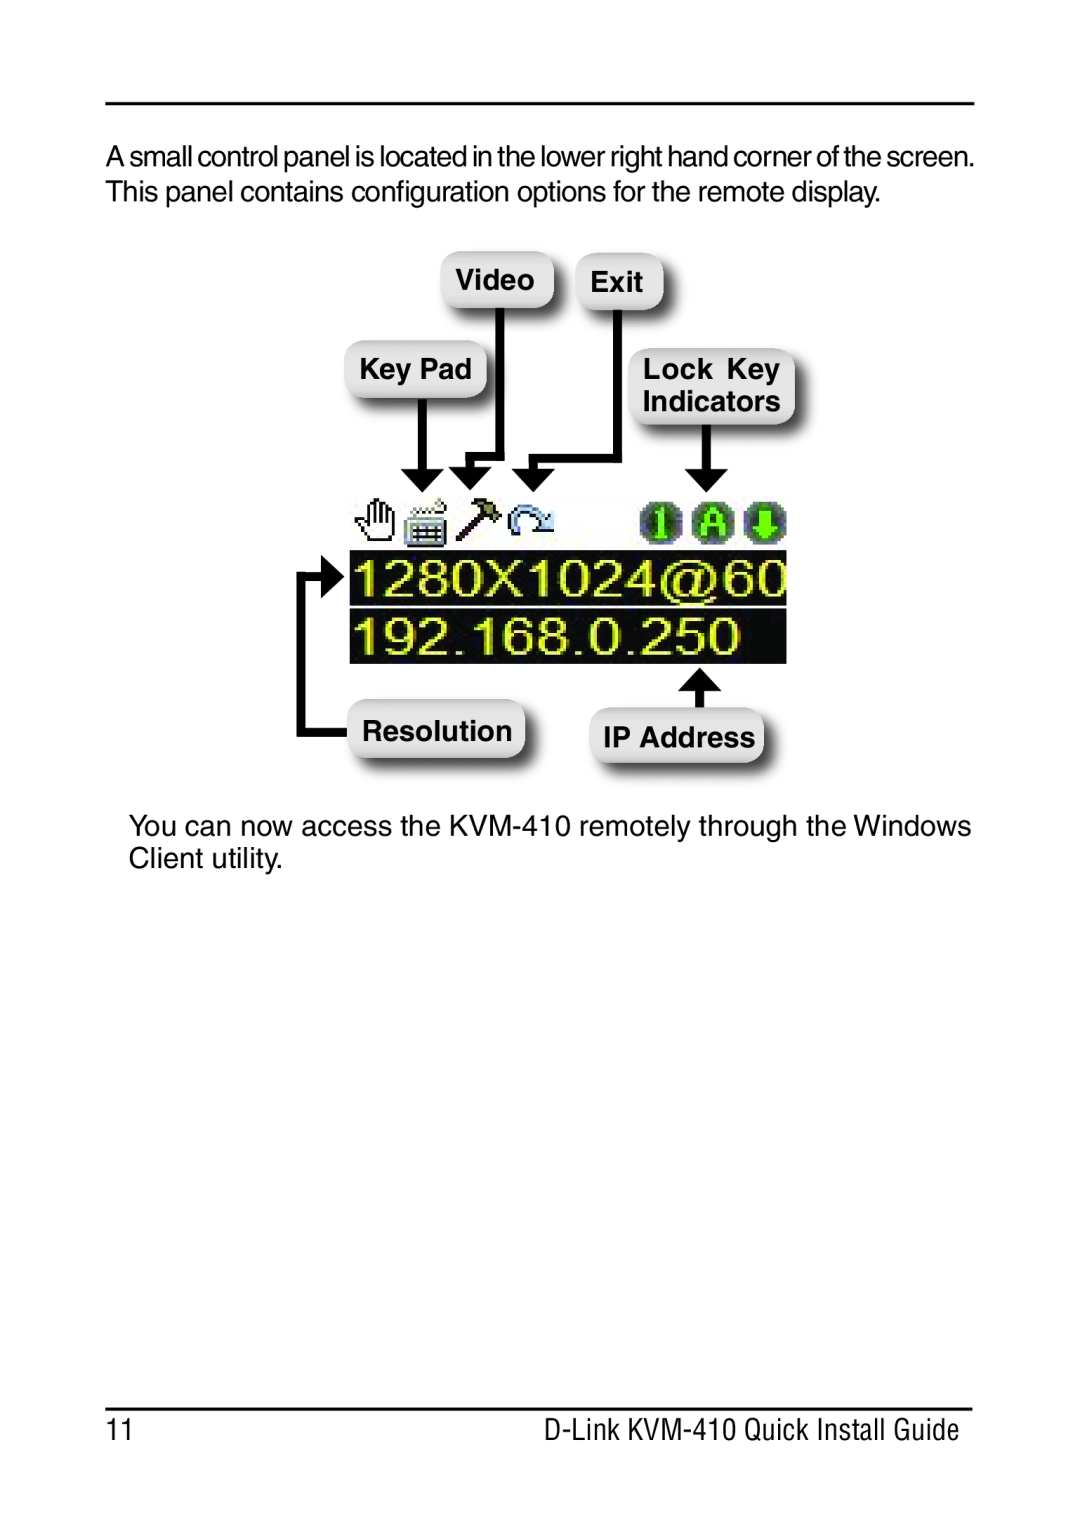 D-Link manual Video Exit, Key Pad, Lock Key Indicators, Resolution, IP Address, D-Link KVM-410 Quick Install Guide 